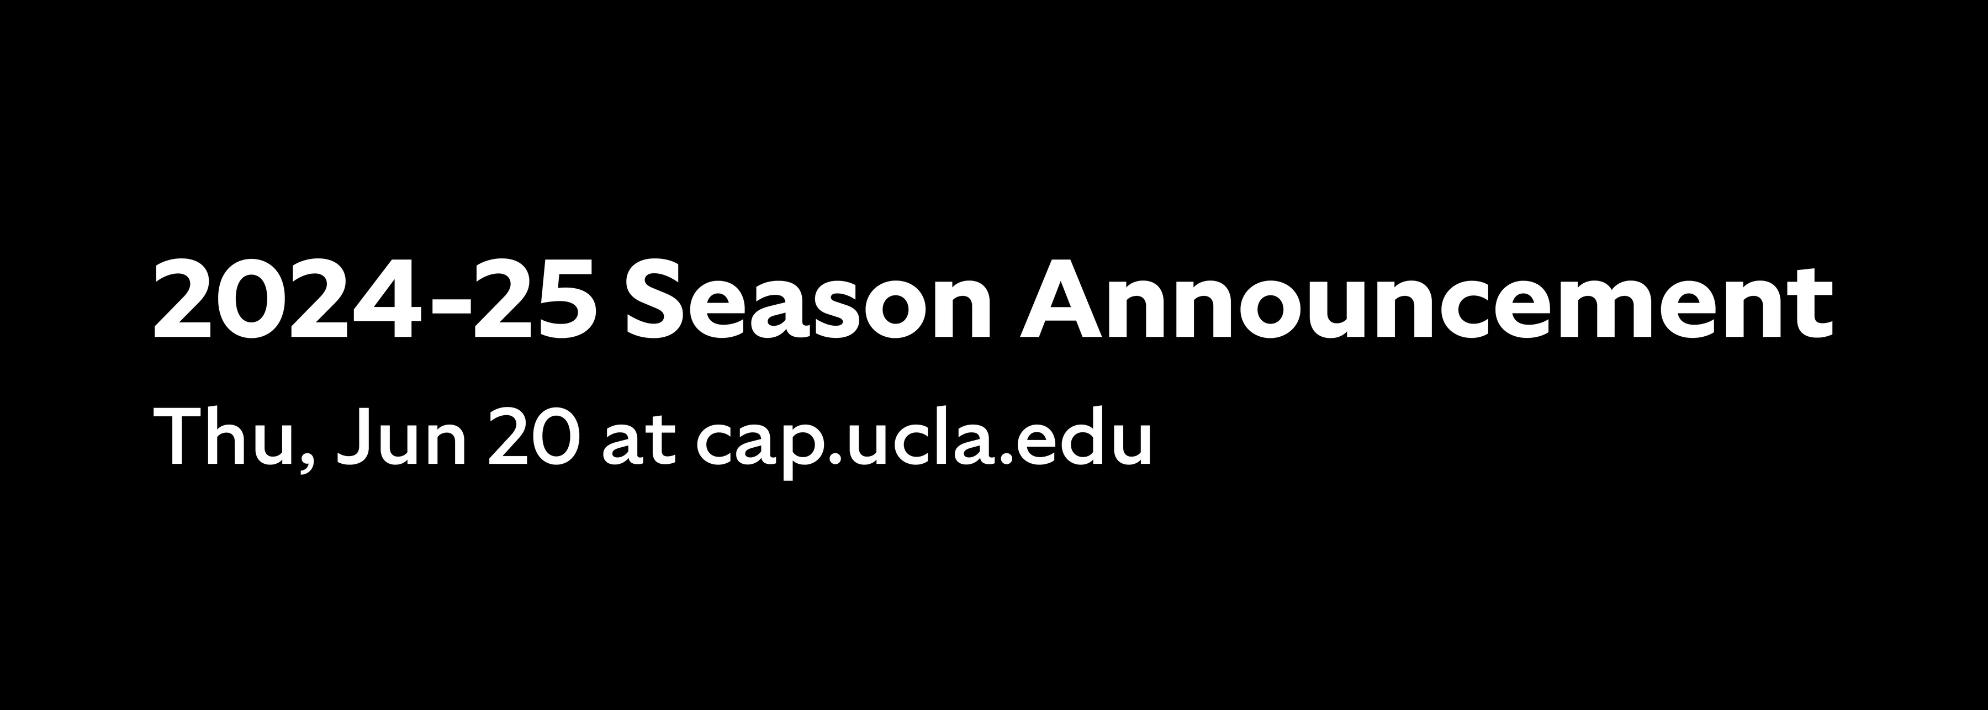 Black background with white text reading '2024-25 Season Announcement: Thu, Jun 20 at cap.ucla.edu'